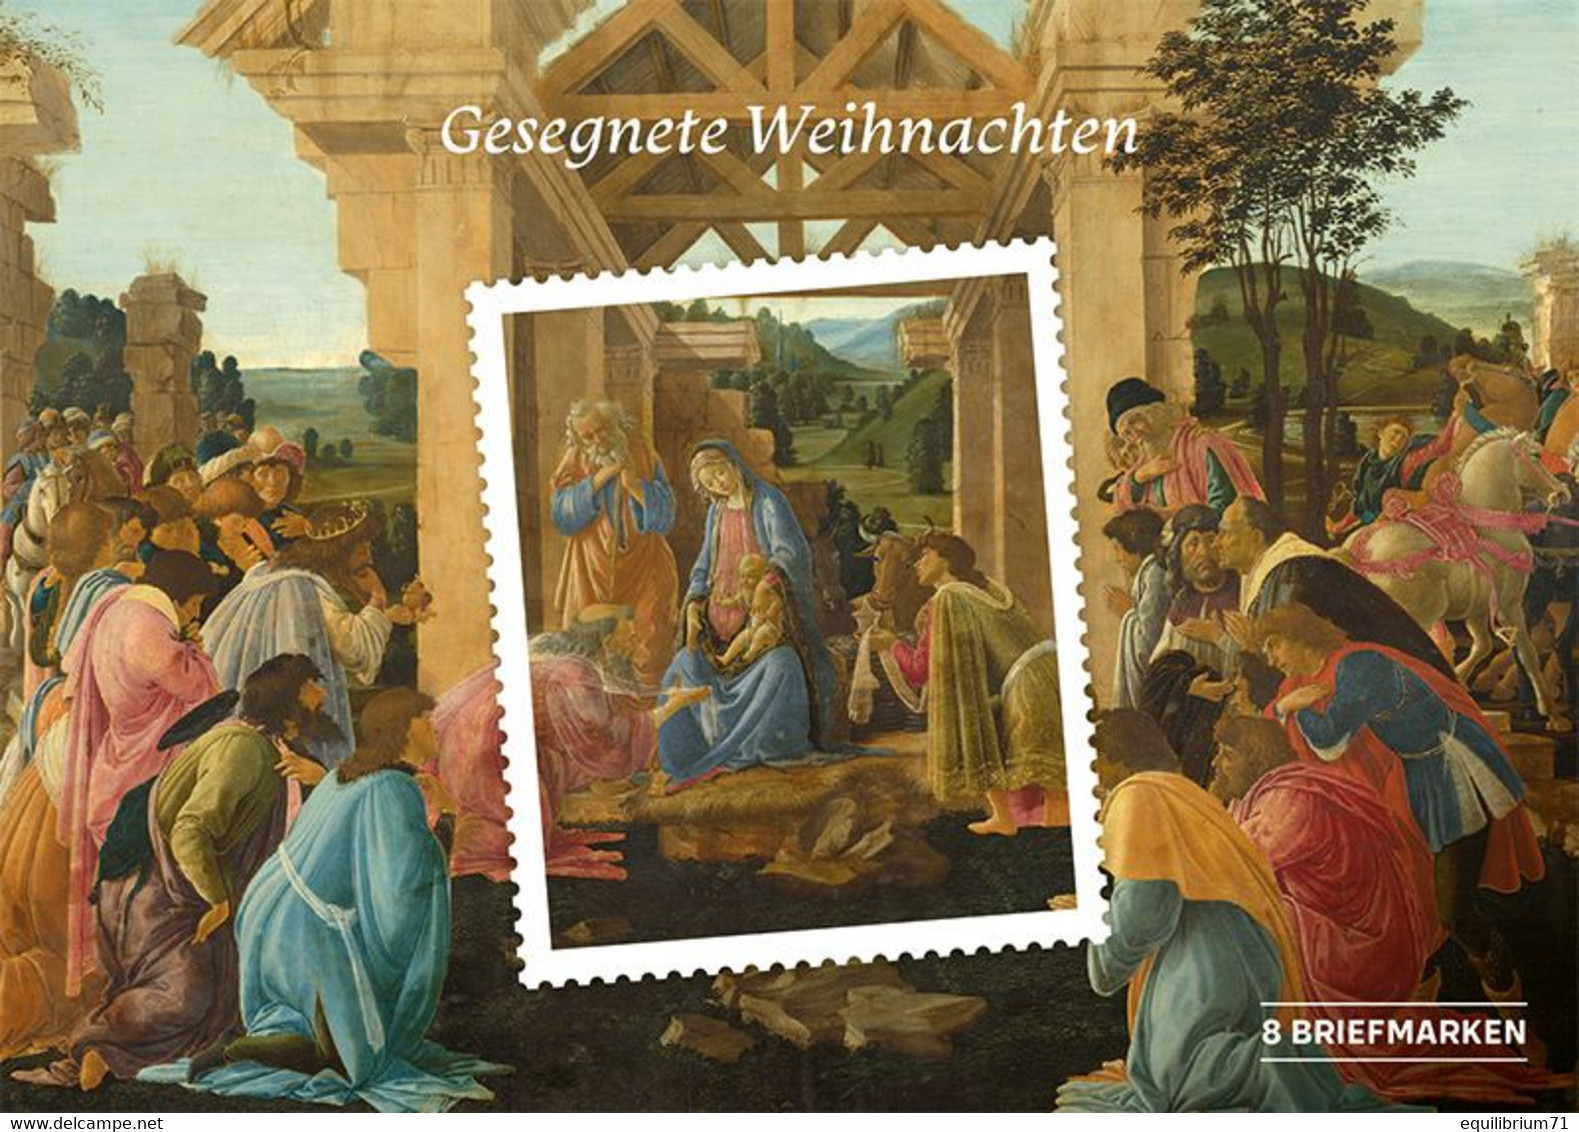 Autriche** - Timbres De Noël / Kerst Postzegels / Weihnachtsmarken / Christmas Stamps - Tableaux